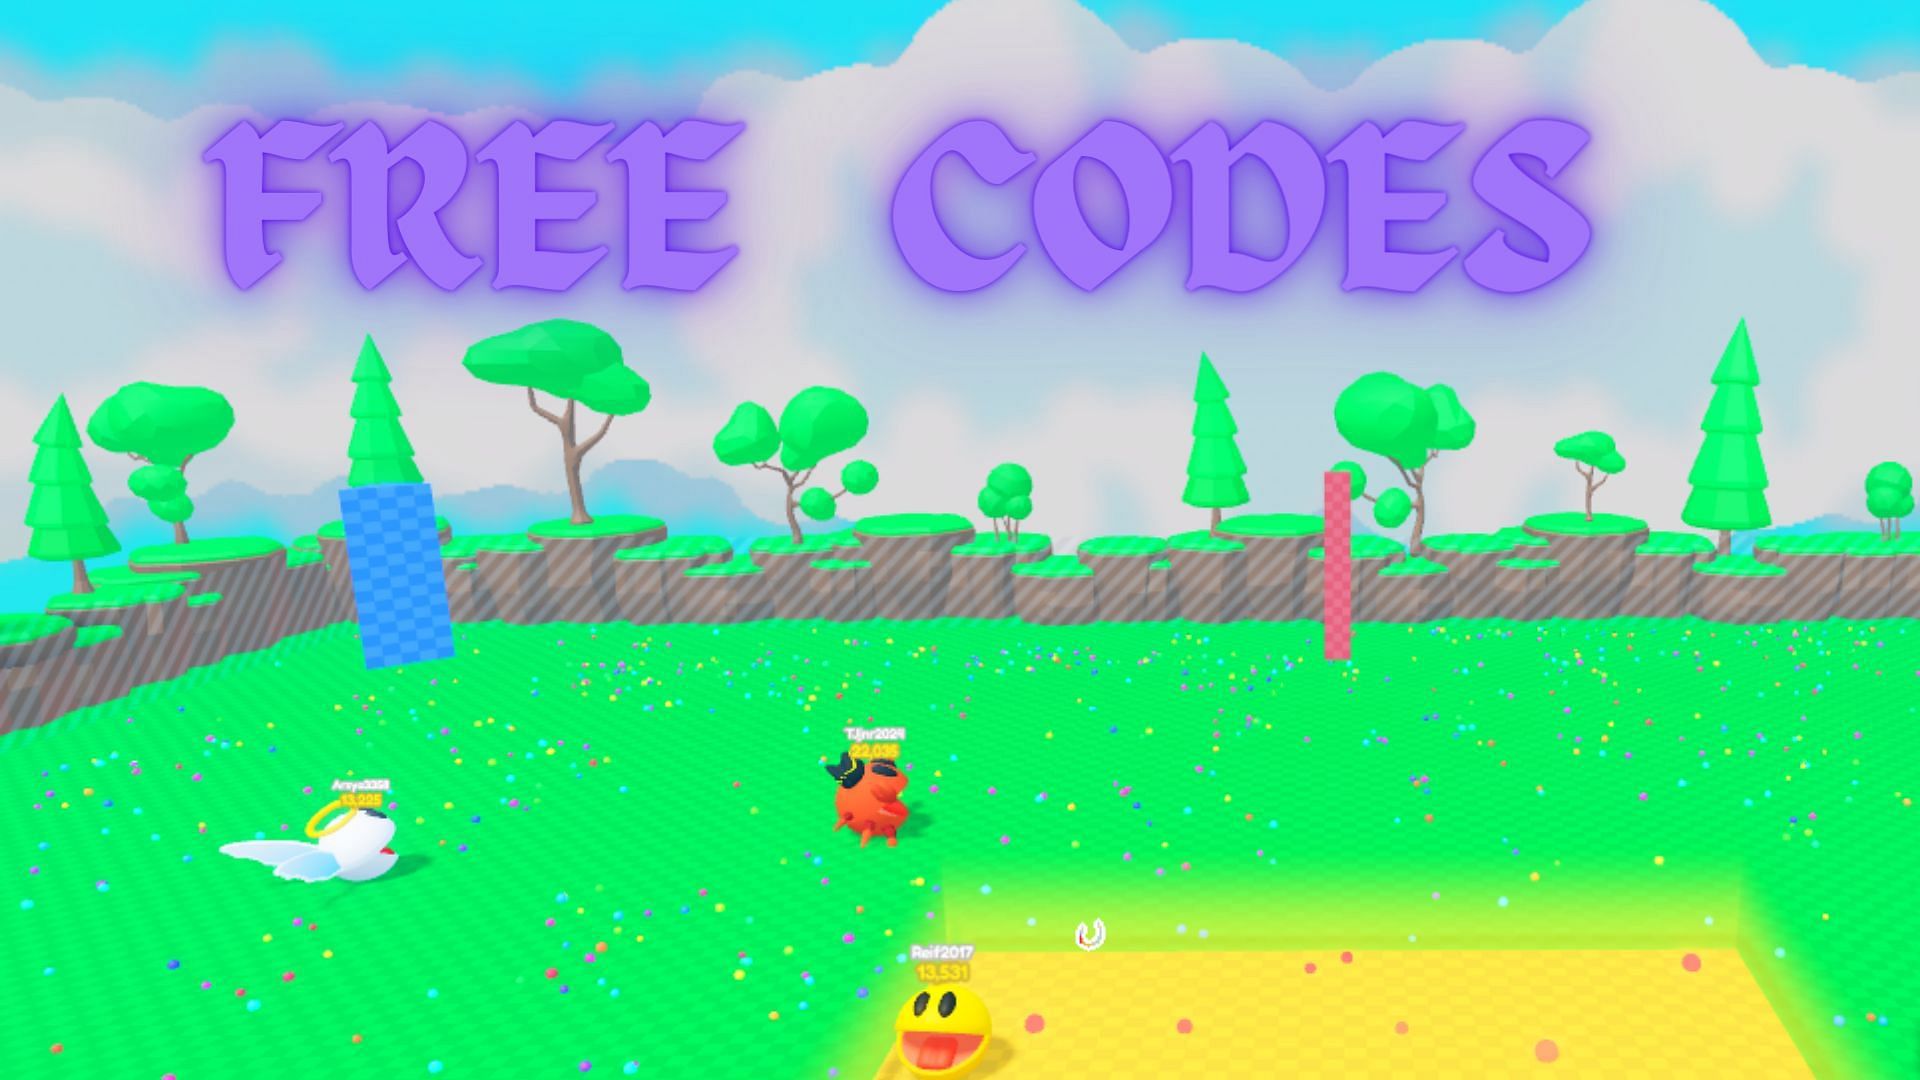 Free Active codes in Ball Eating Simulator (Image via Roblox)